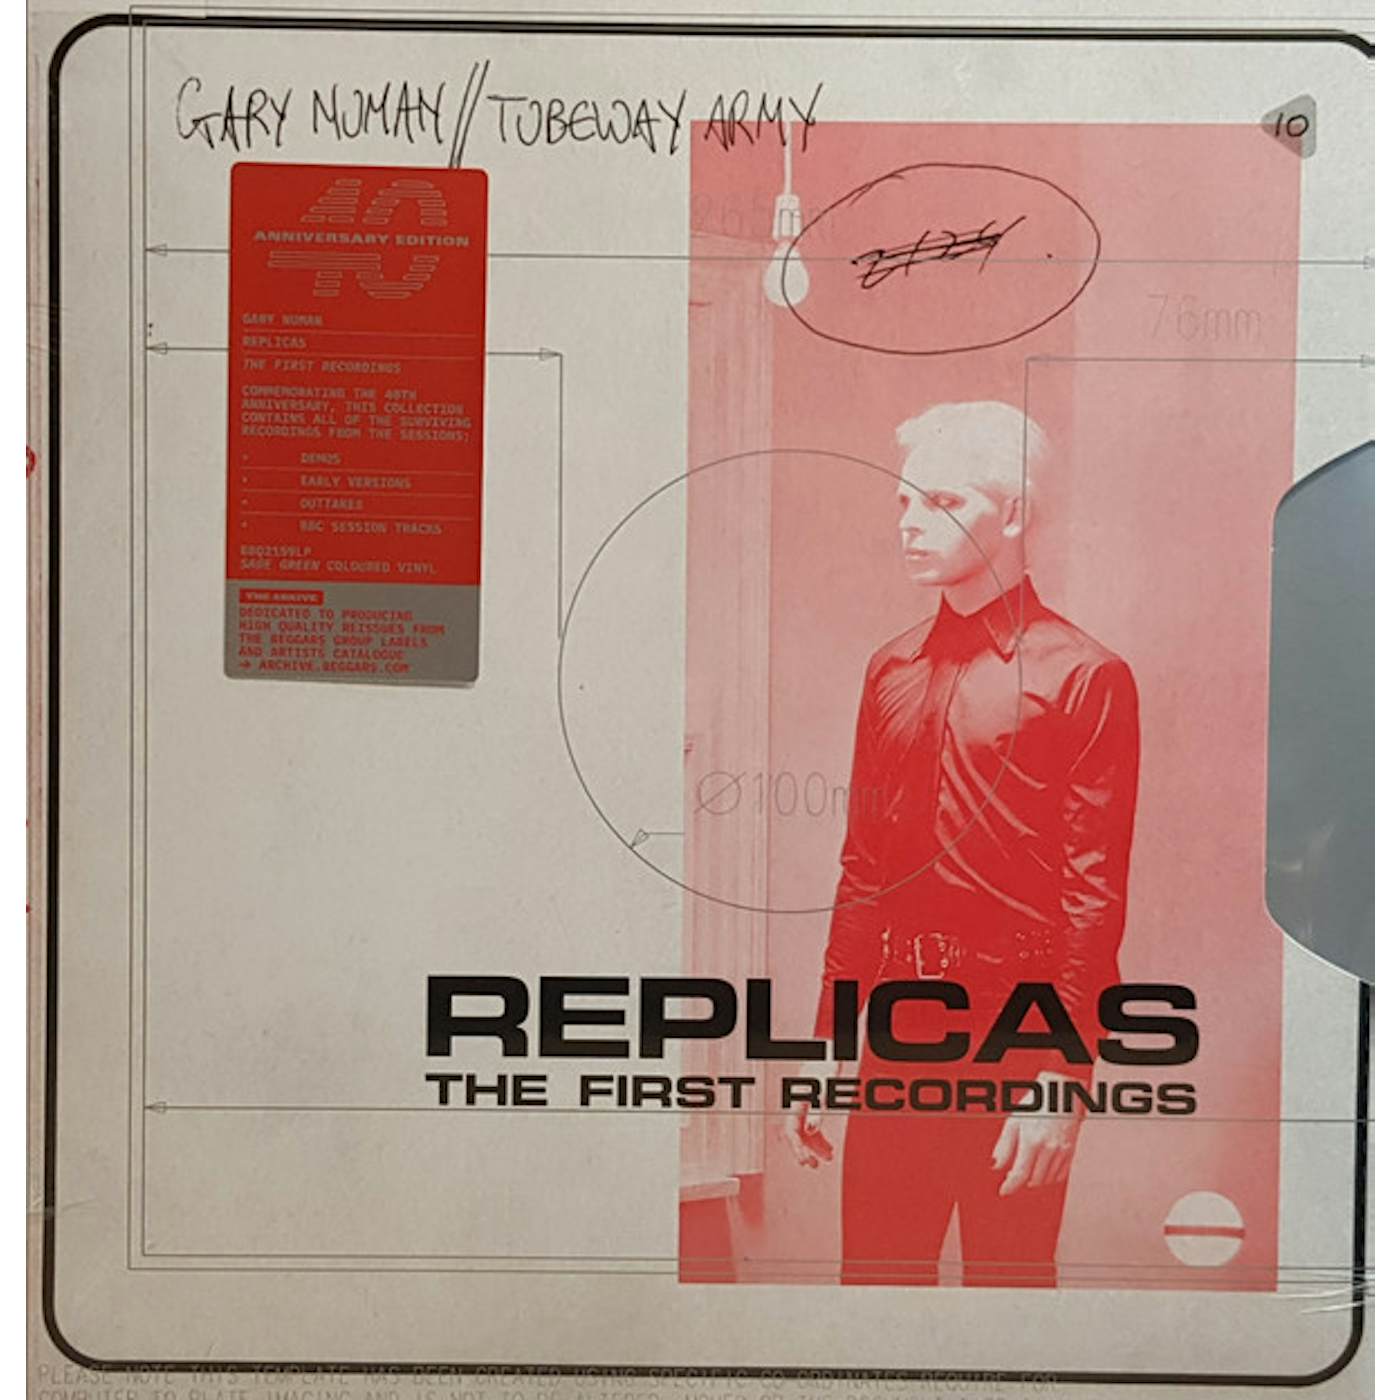 Gary Numan REPLICAS - THE FIRST RECORDINGS CD